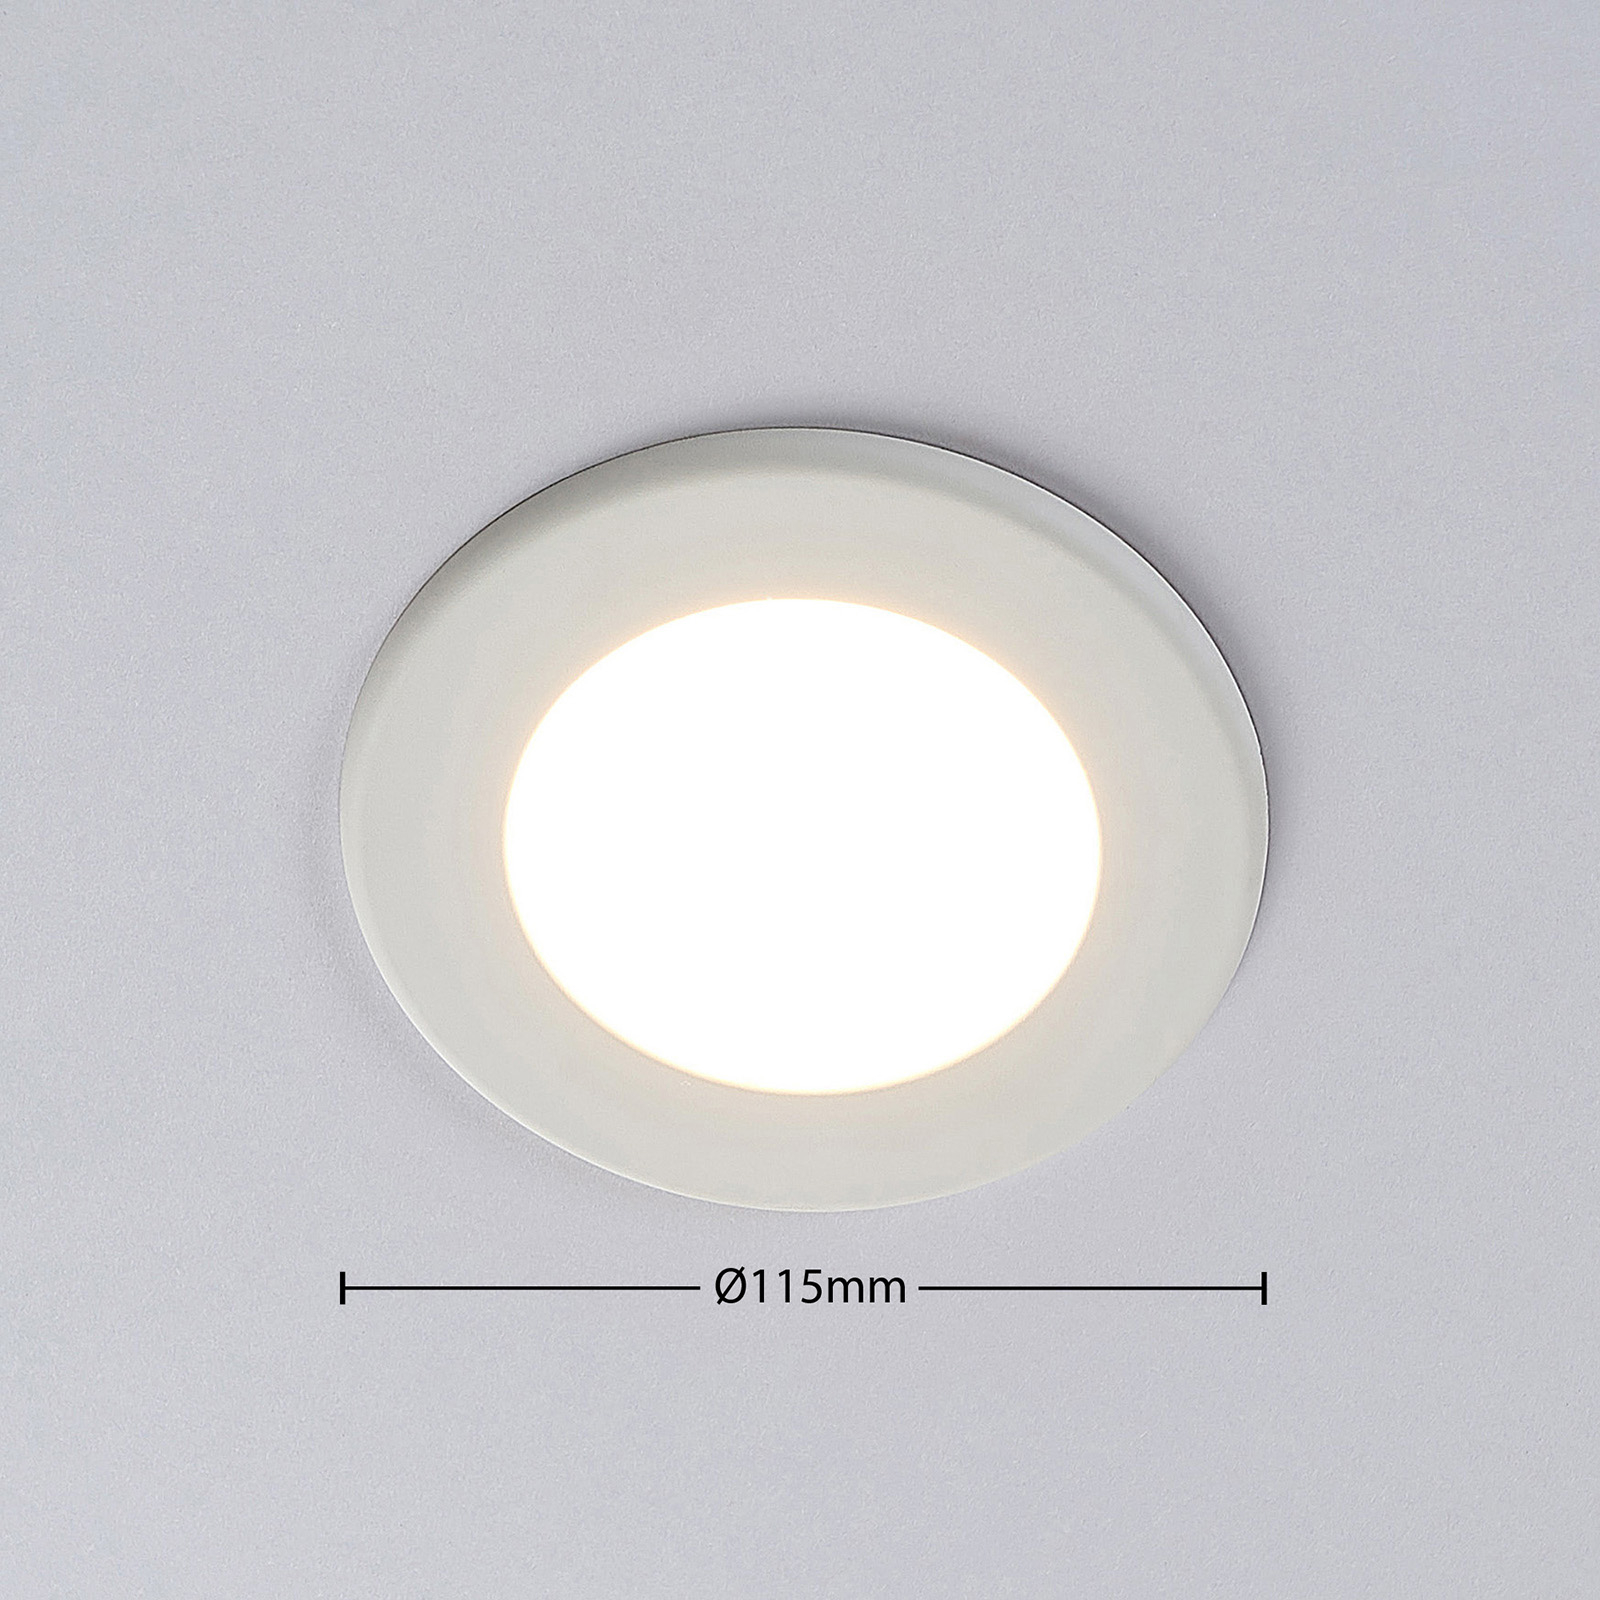 LED-indbygningsspot Joki hvid 3000K rund 11,5cm